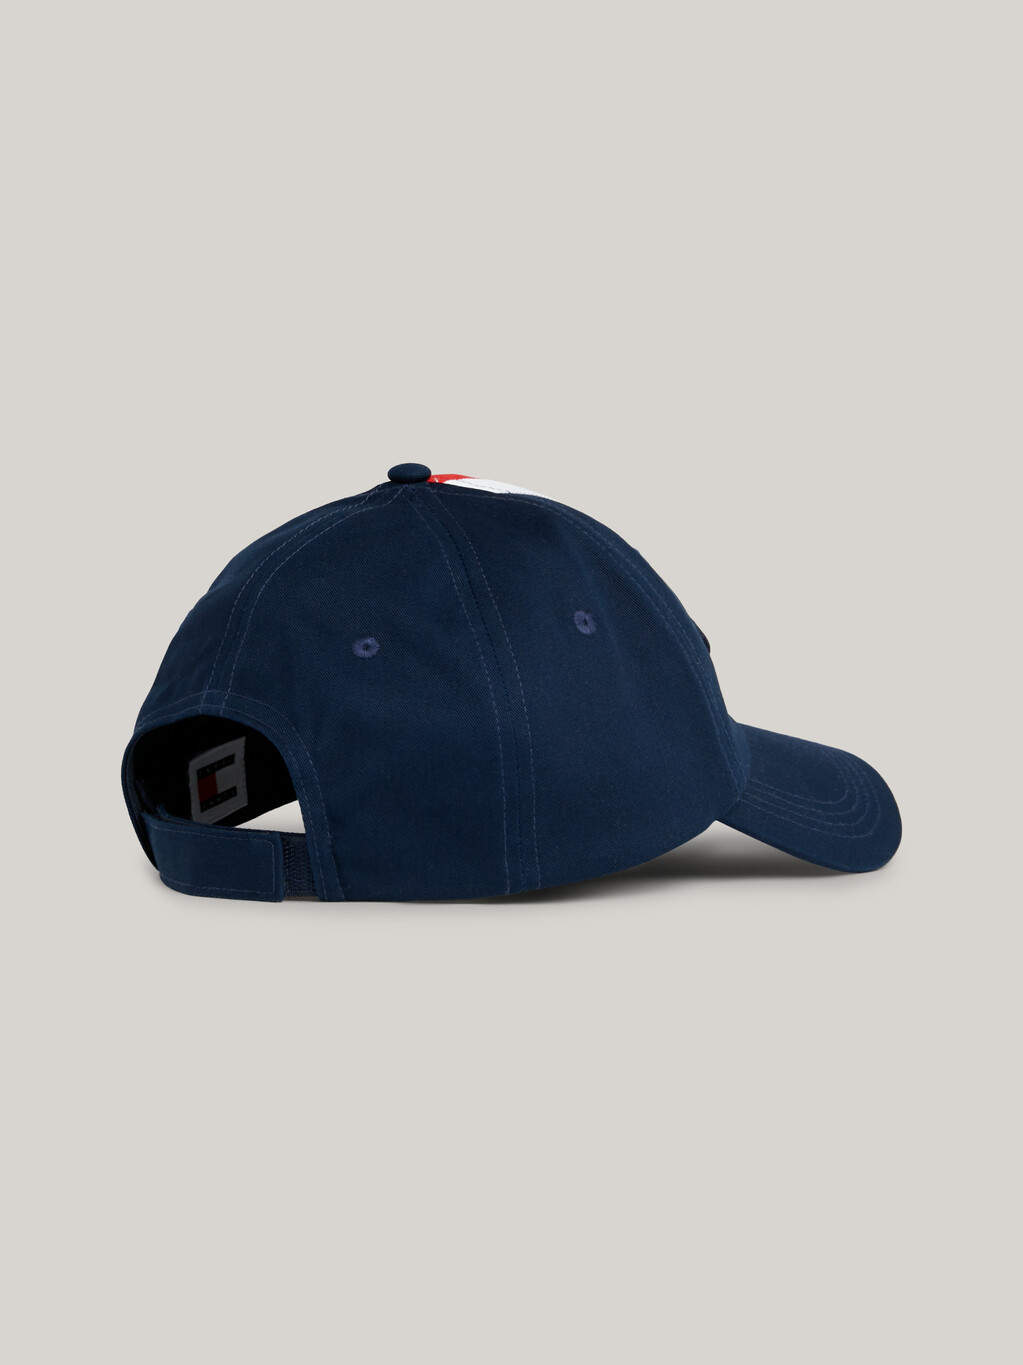 Prep Logo棒球帽, Dark Night Navy, hi-res